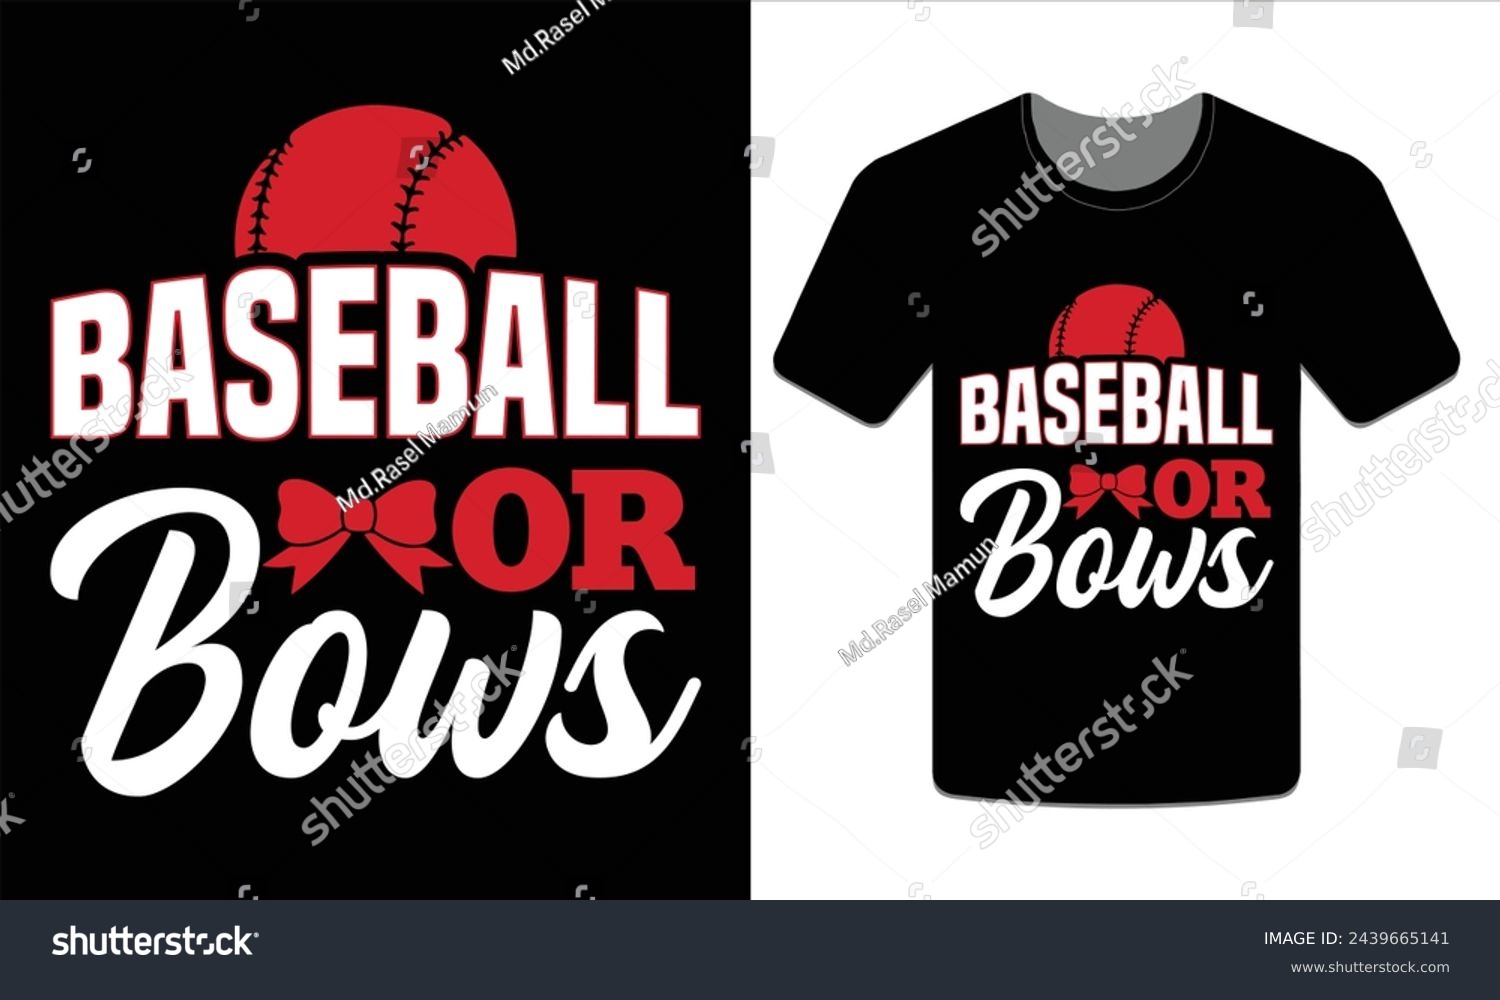 SVG of Baseball or Bows, Baseball t-shirt design Vector Art svg